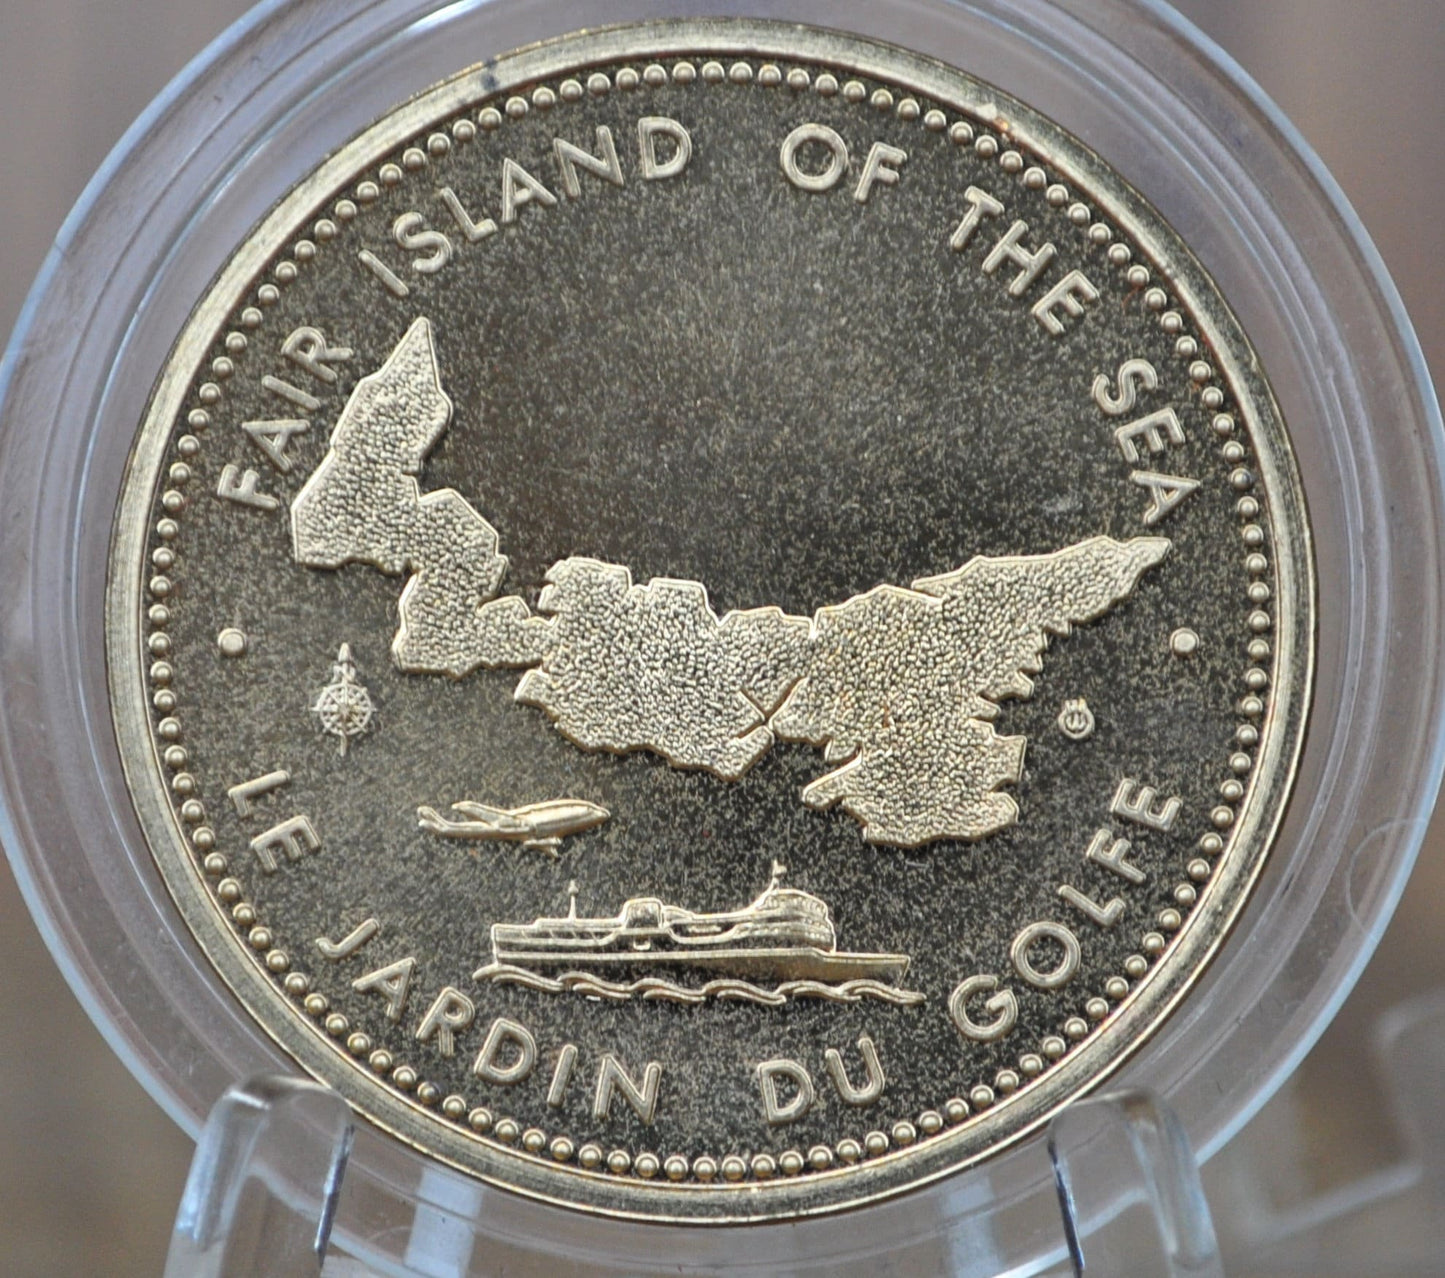 Prince Edward Island Centennial of Confederation - Choose by Type - Prince Edward Island Commemorative Medal